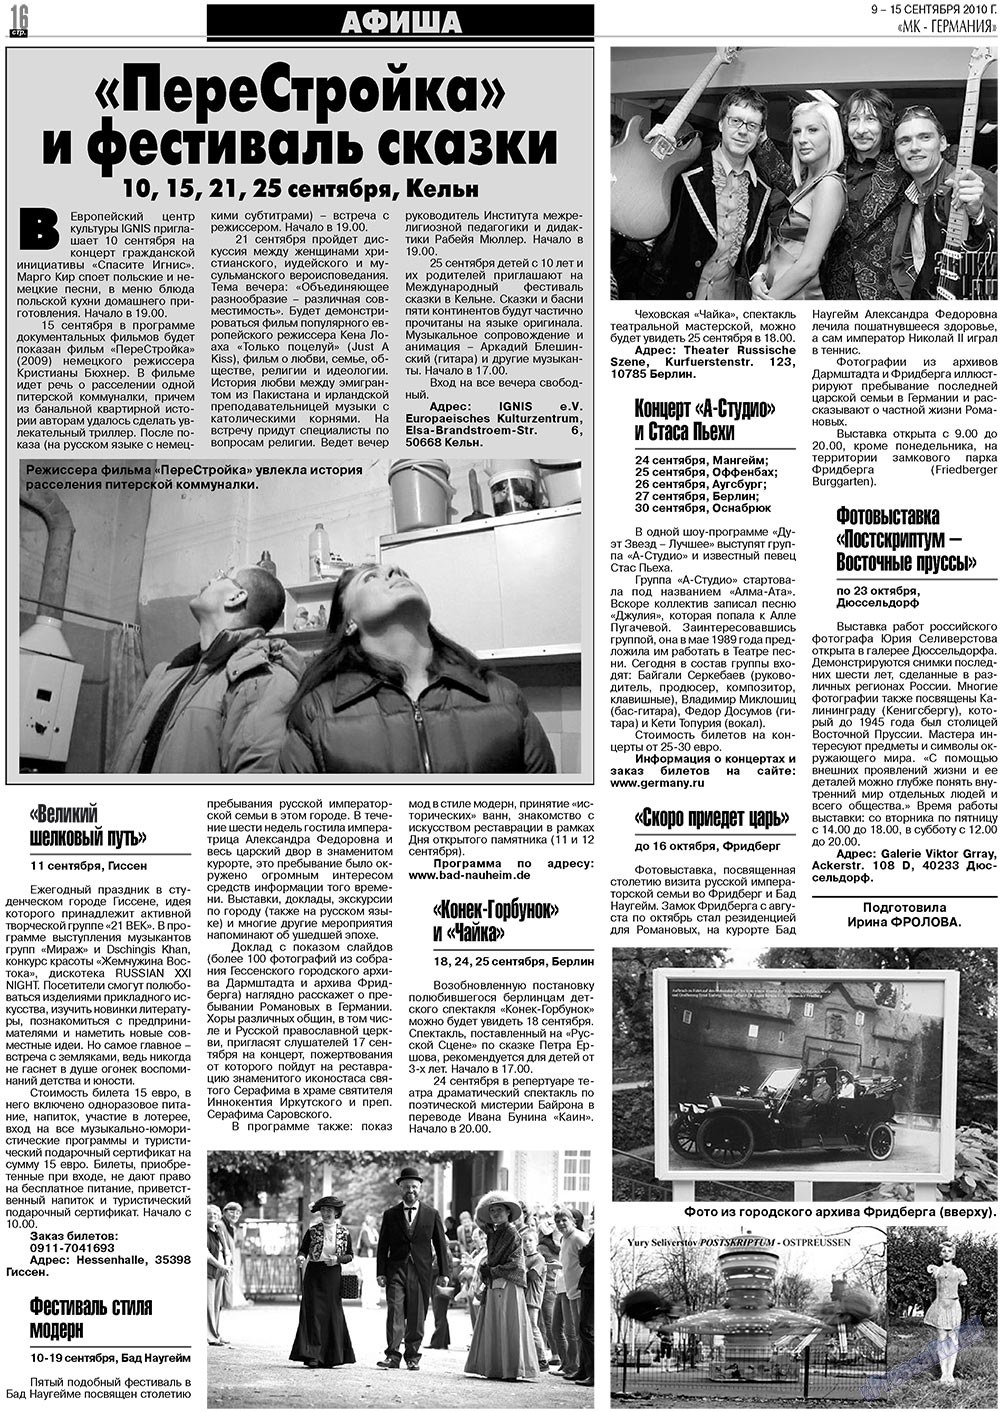 МК-Германия, газета. 2010 №37 стр.16